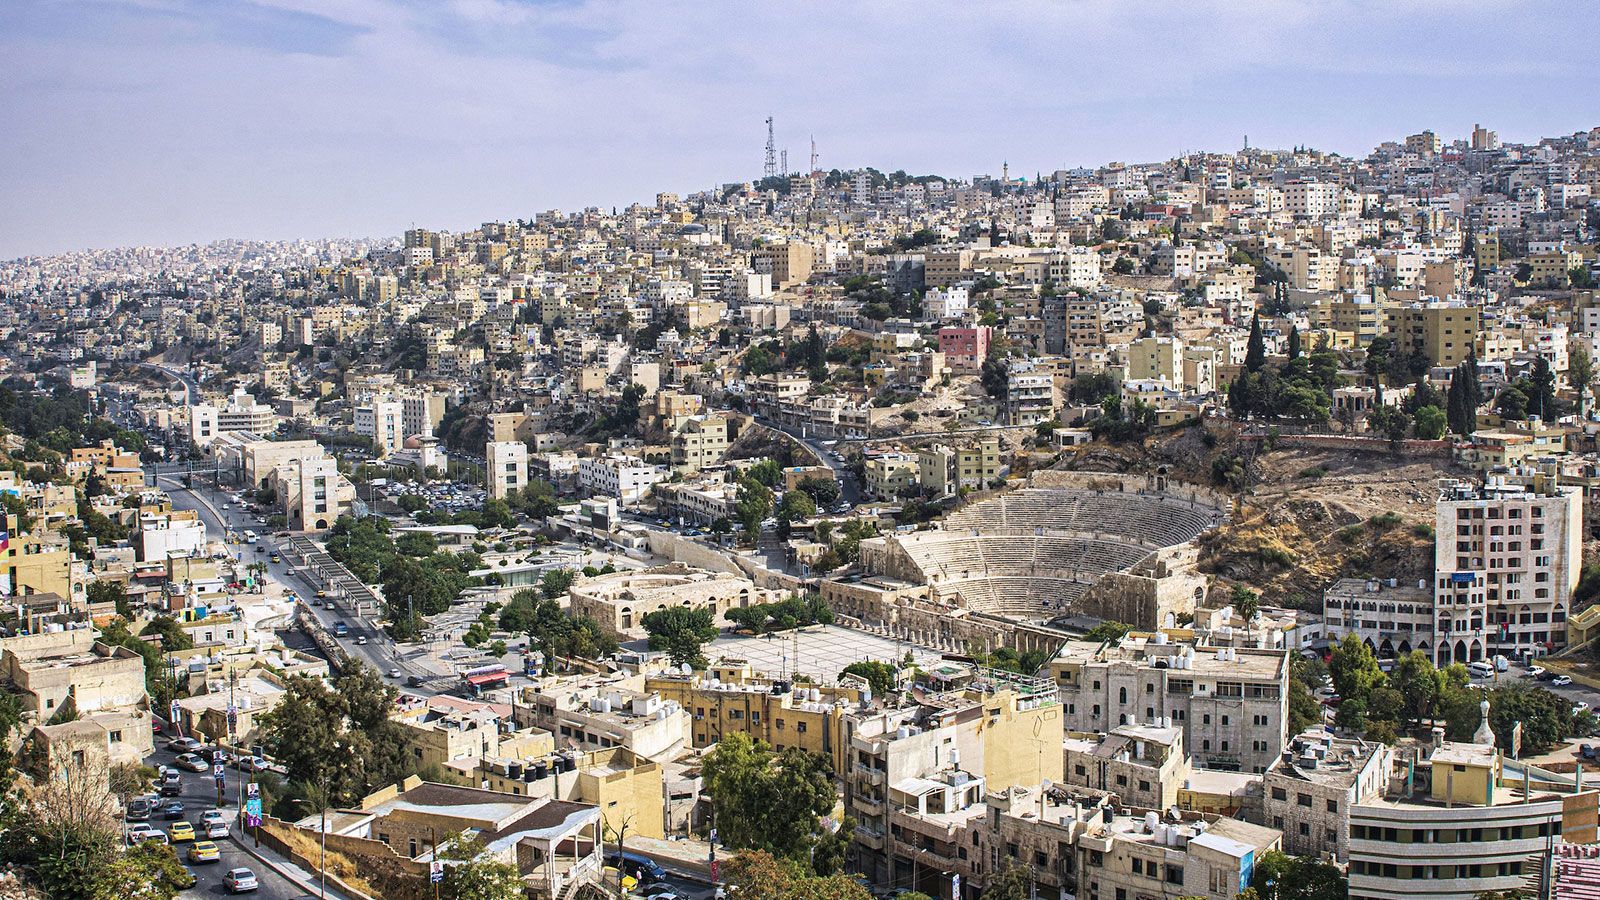 landscape of Amman, Jordan